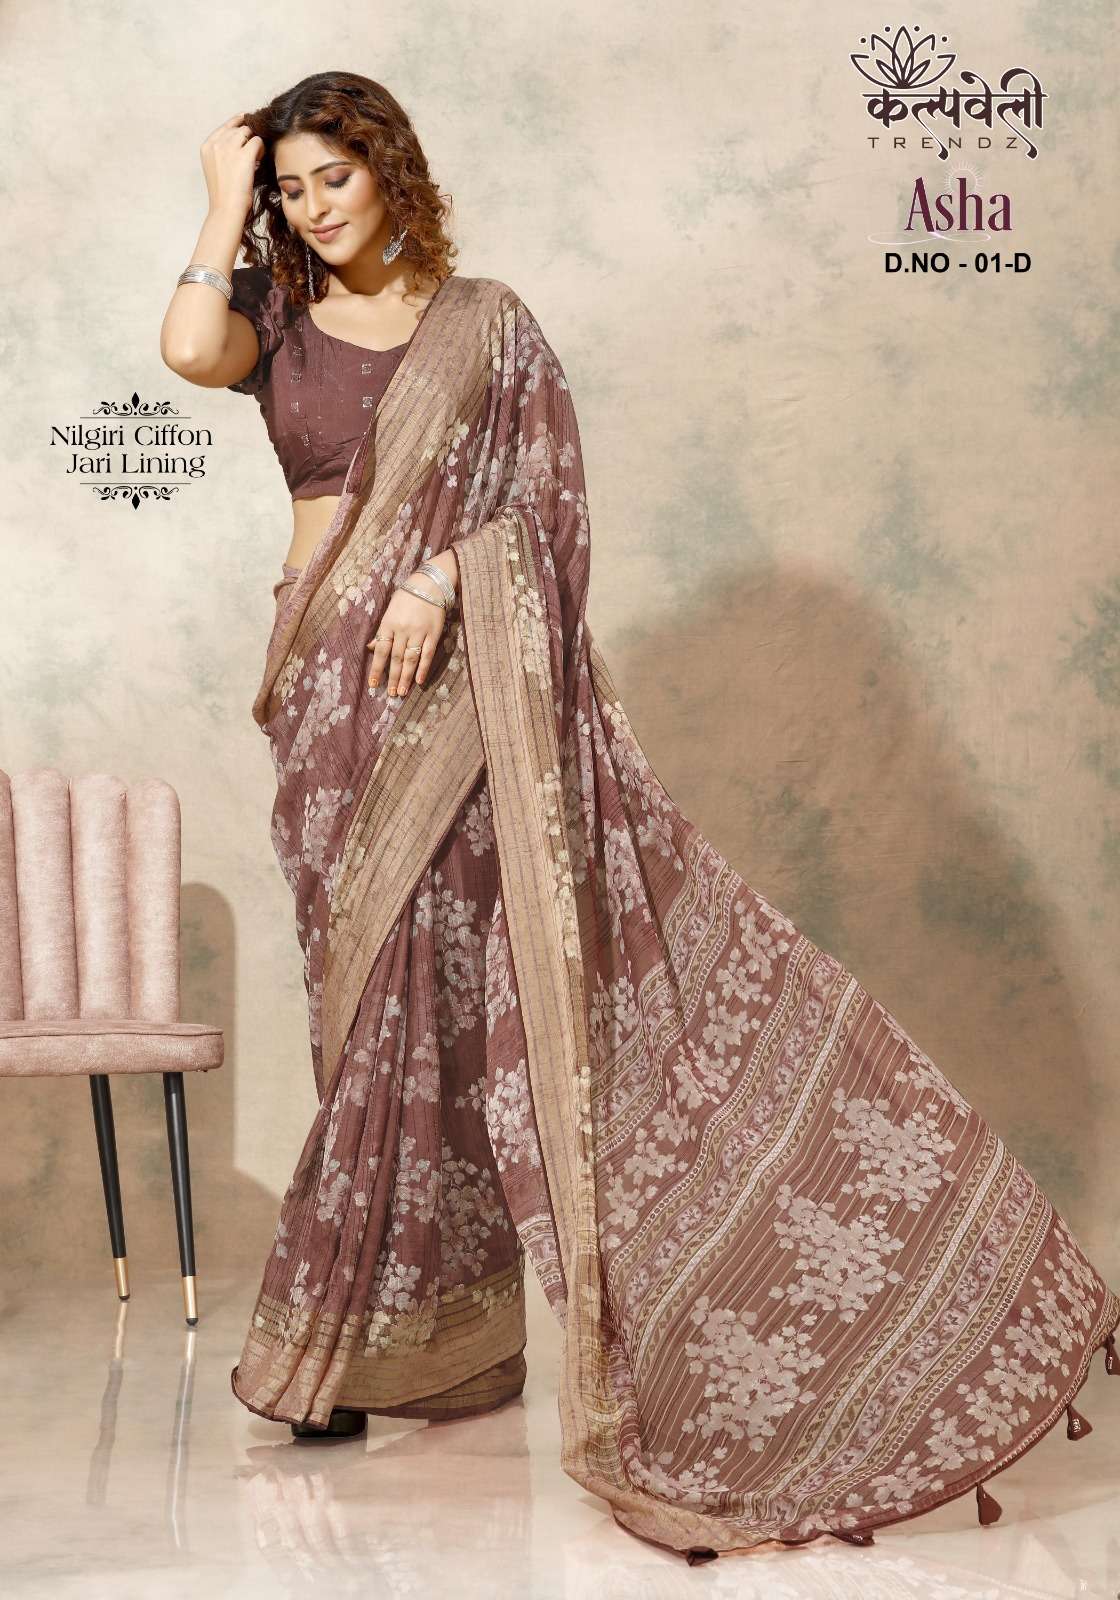 kalpavelly trendz asha 01 fancy chiffon casual sarees